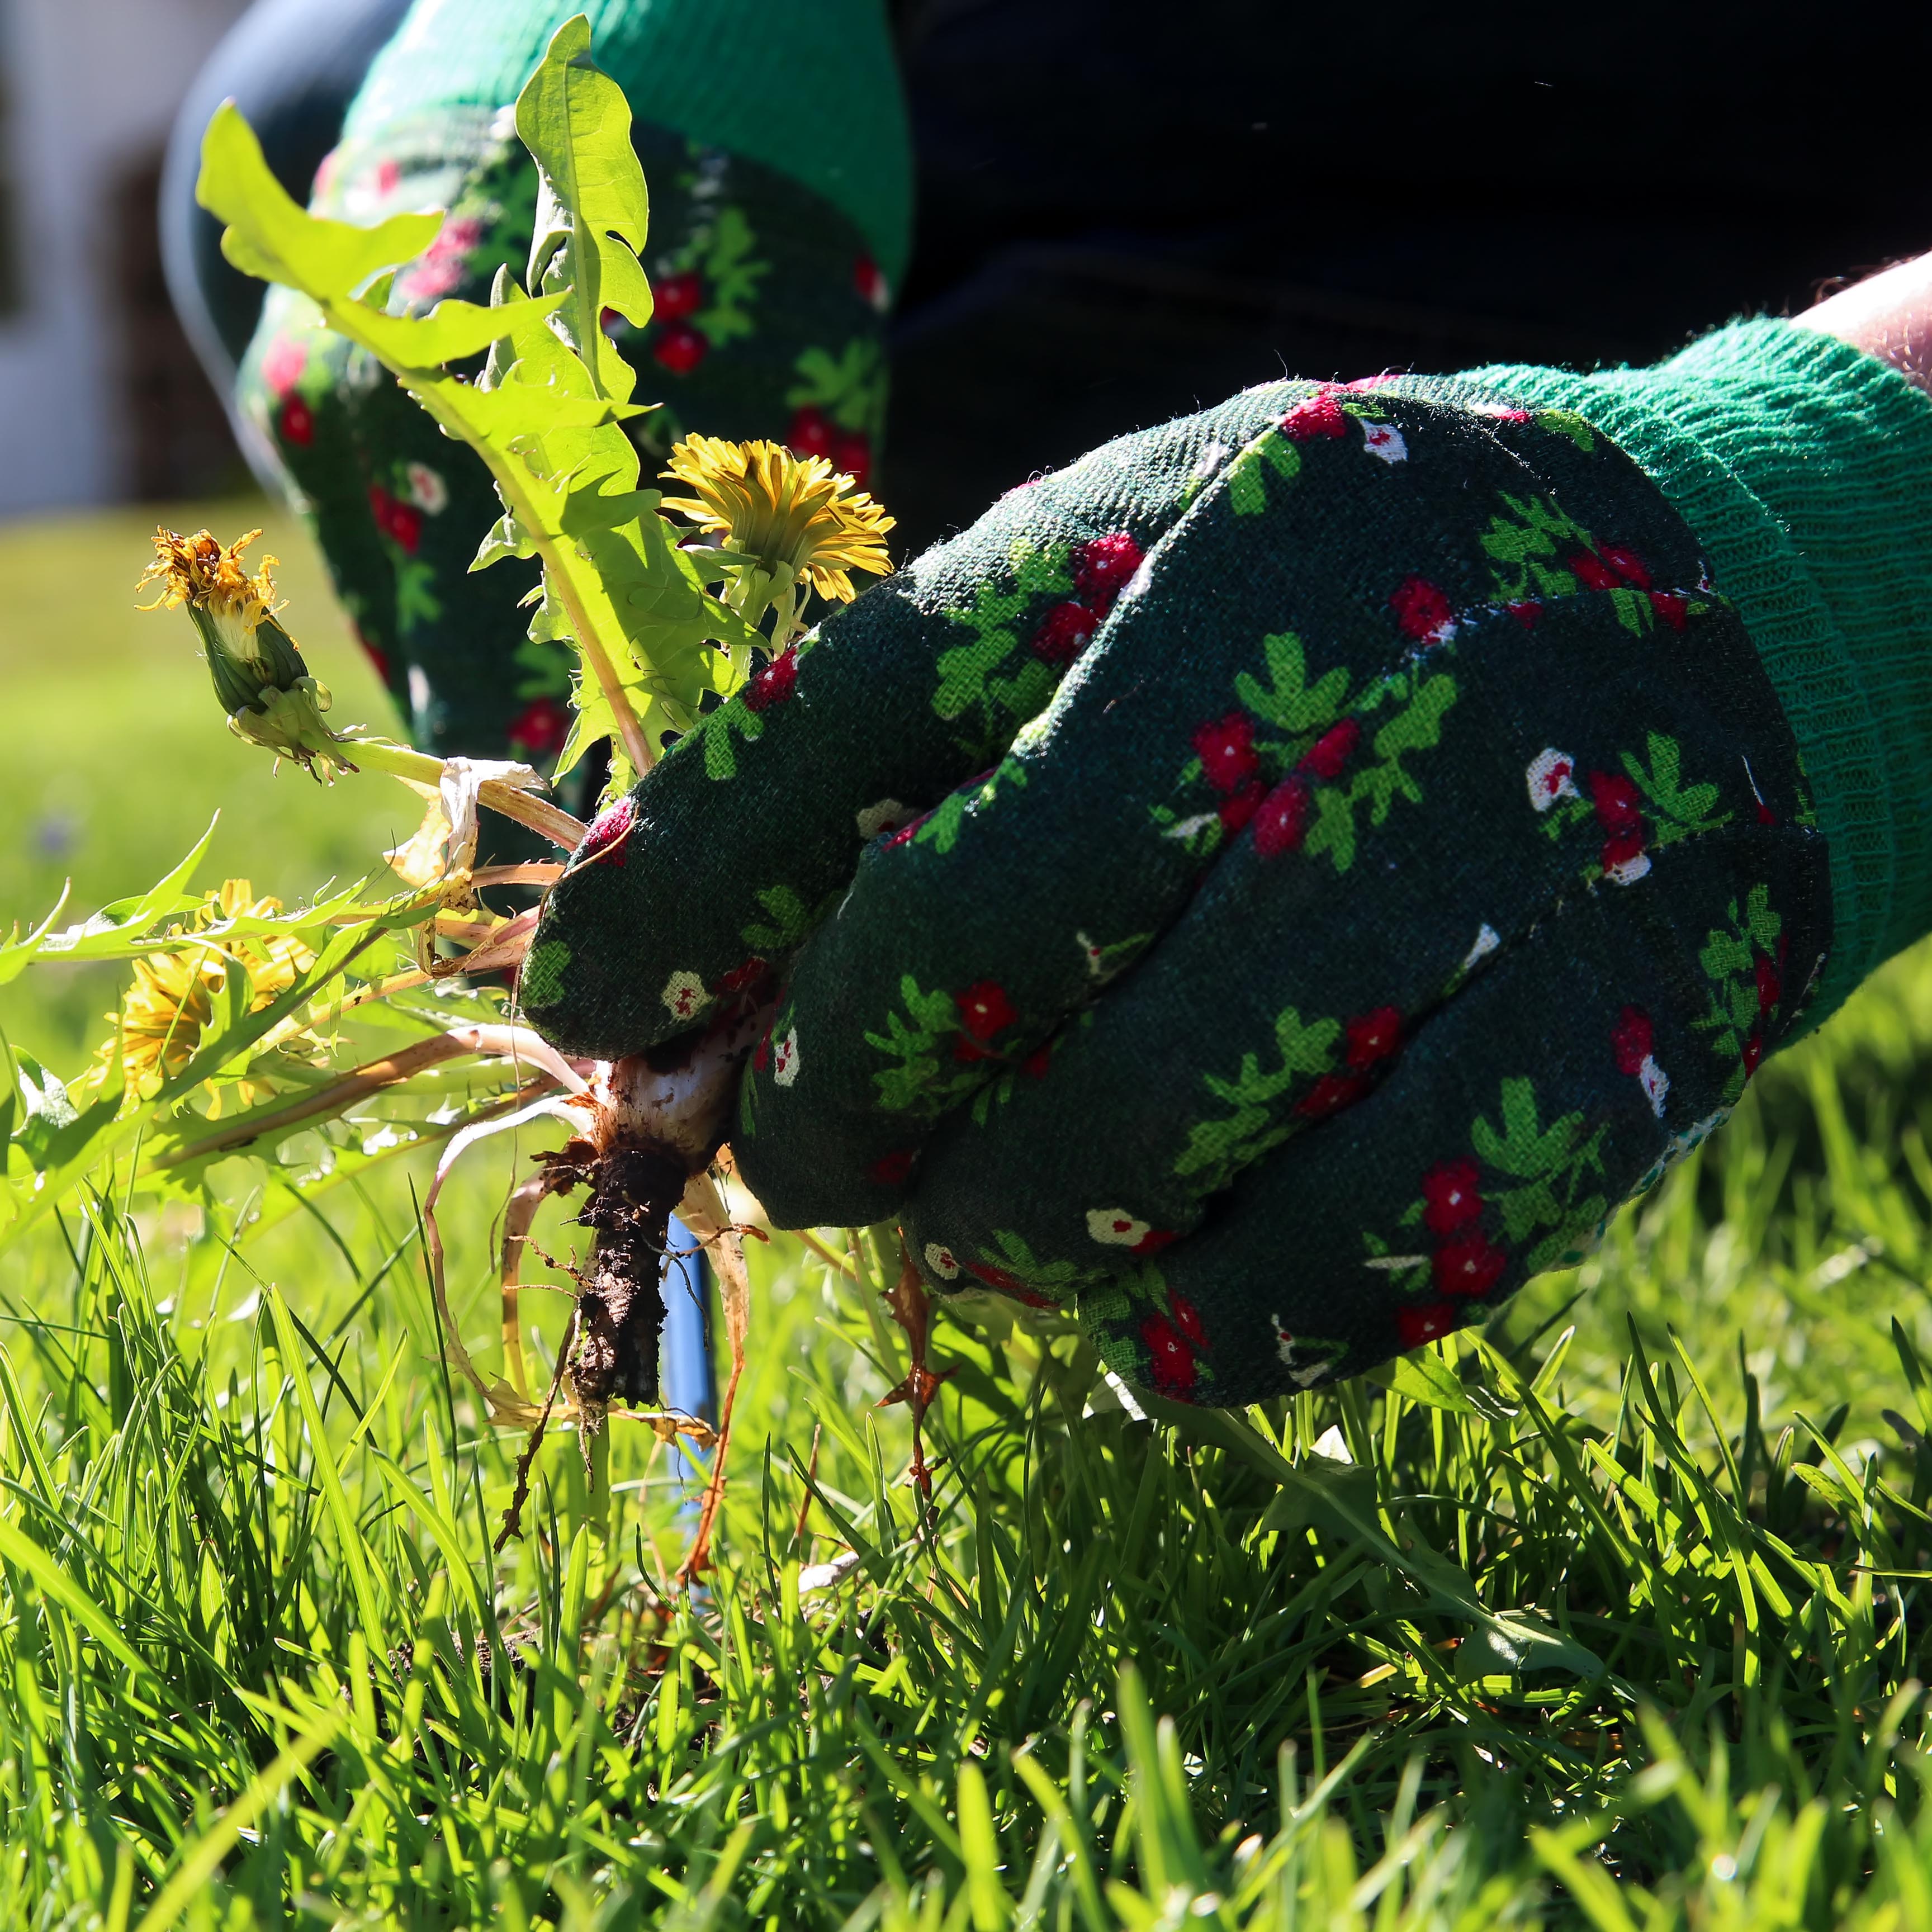 Pulling dandelions from the yard. Saklakova / iStock / via Getty Images